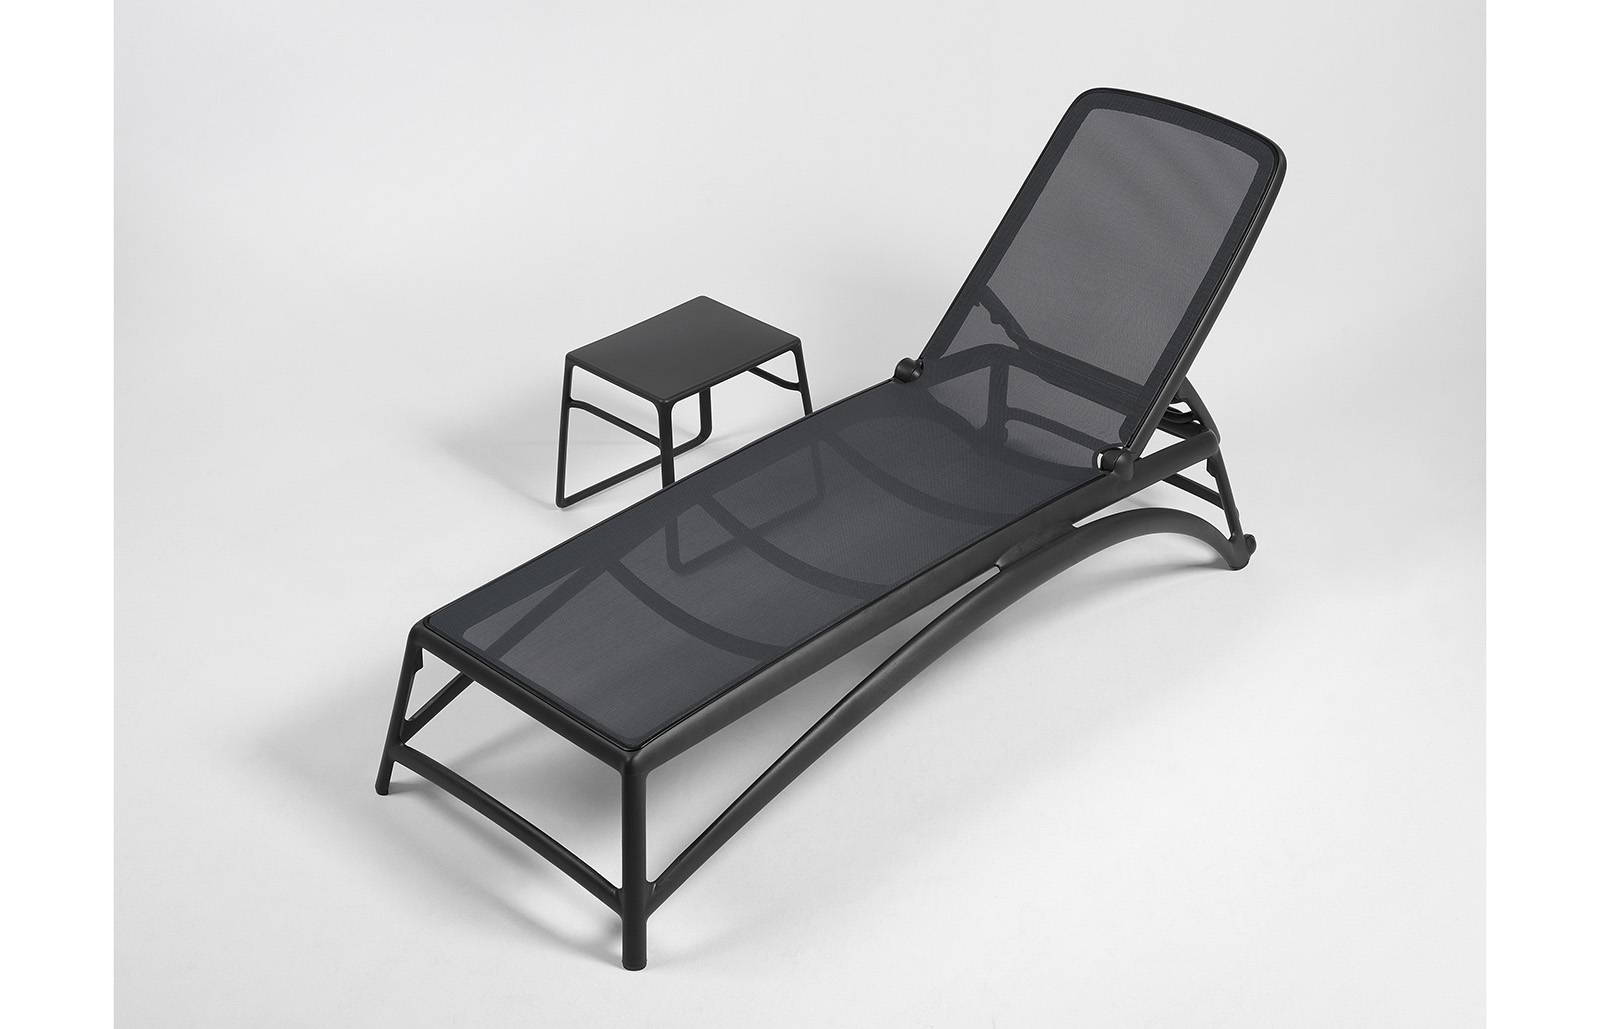 Atlantico sun lounger in charcoal, Nardi outdoor furniture